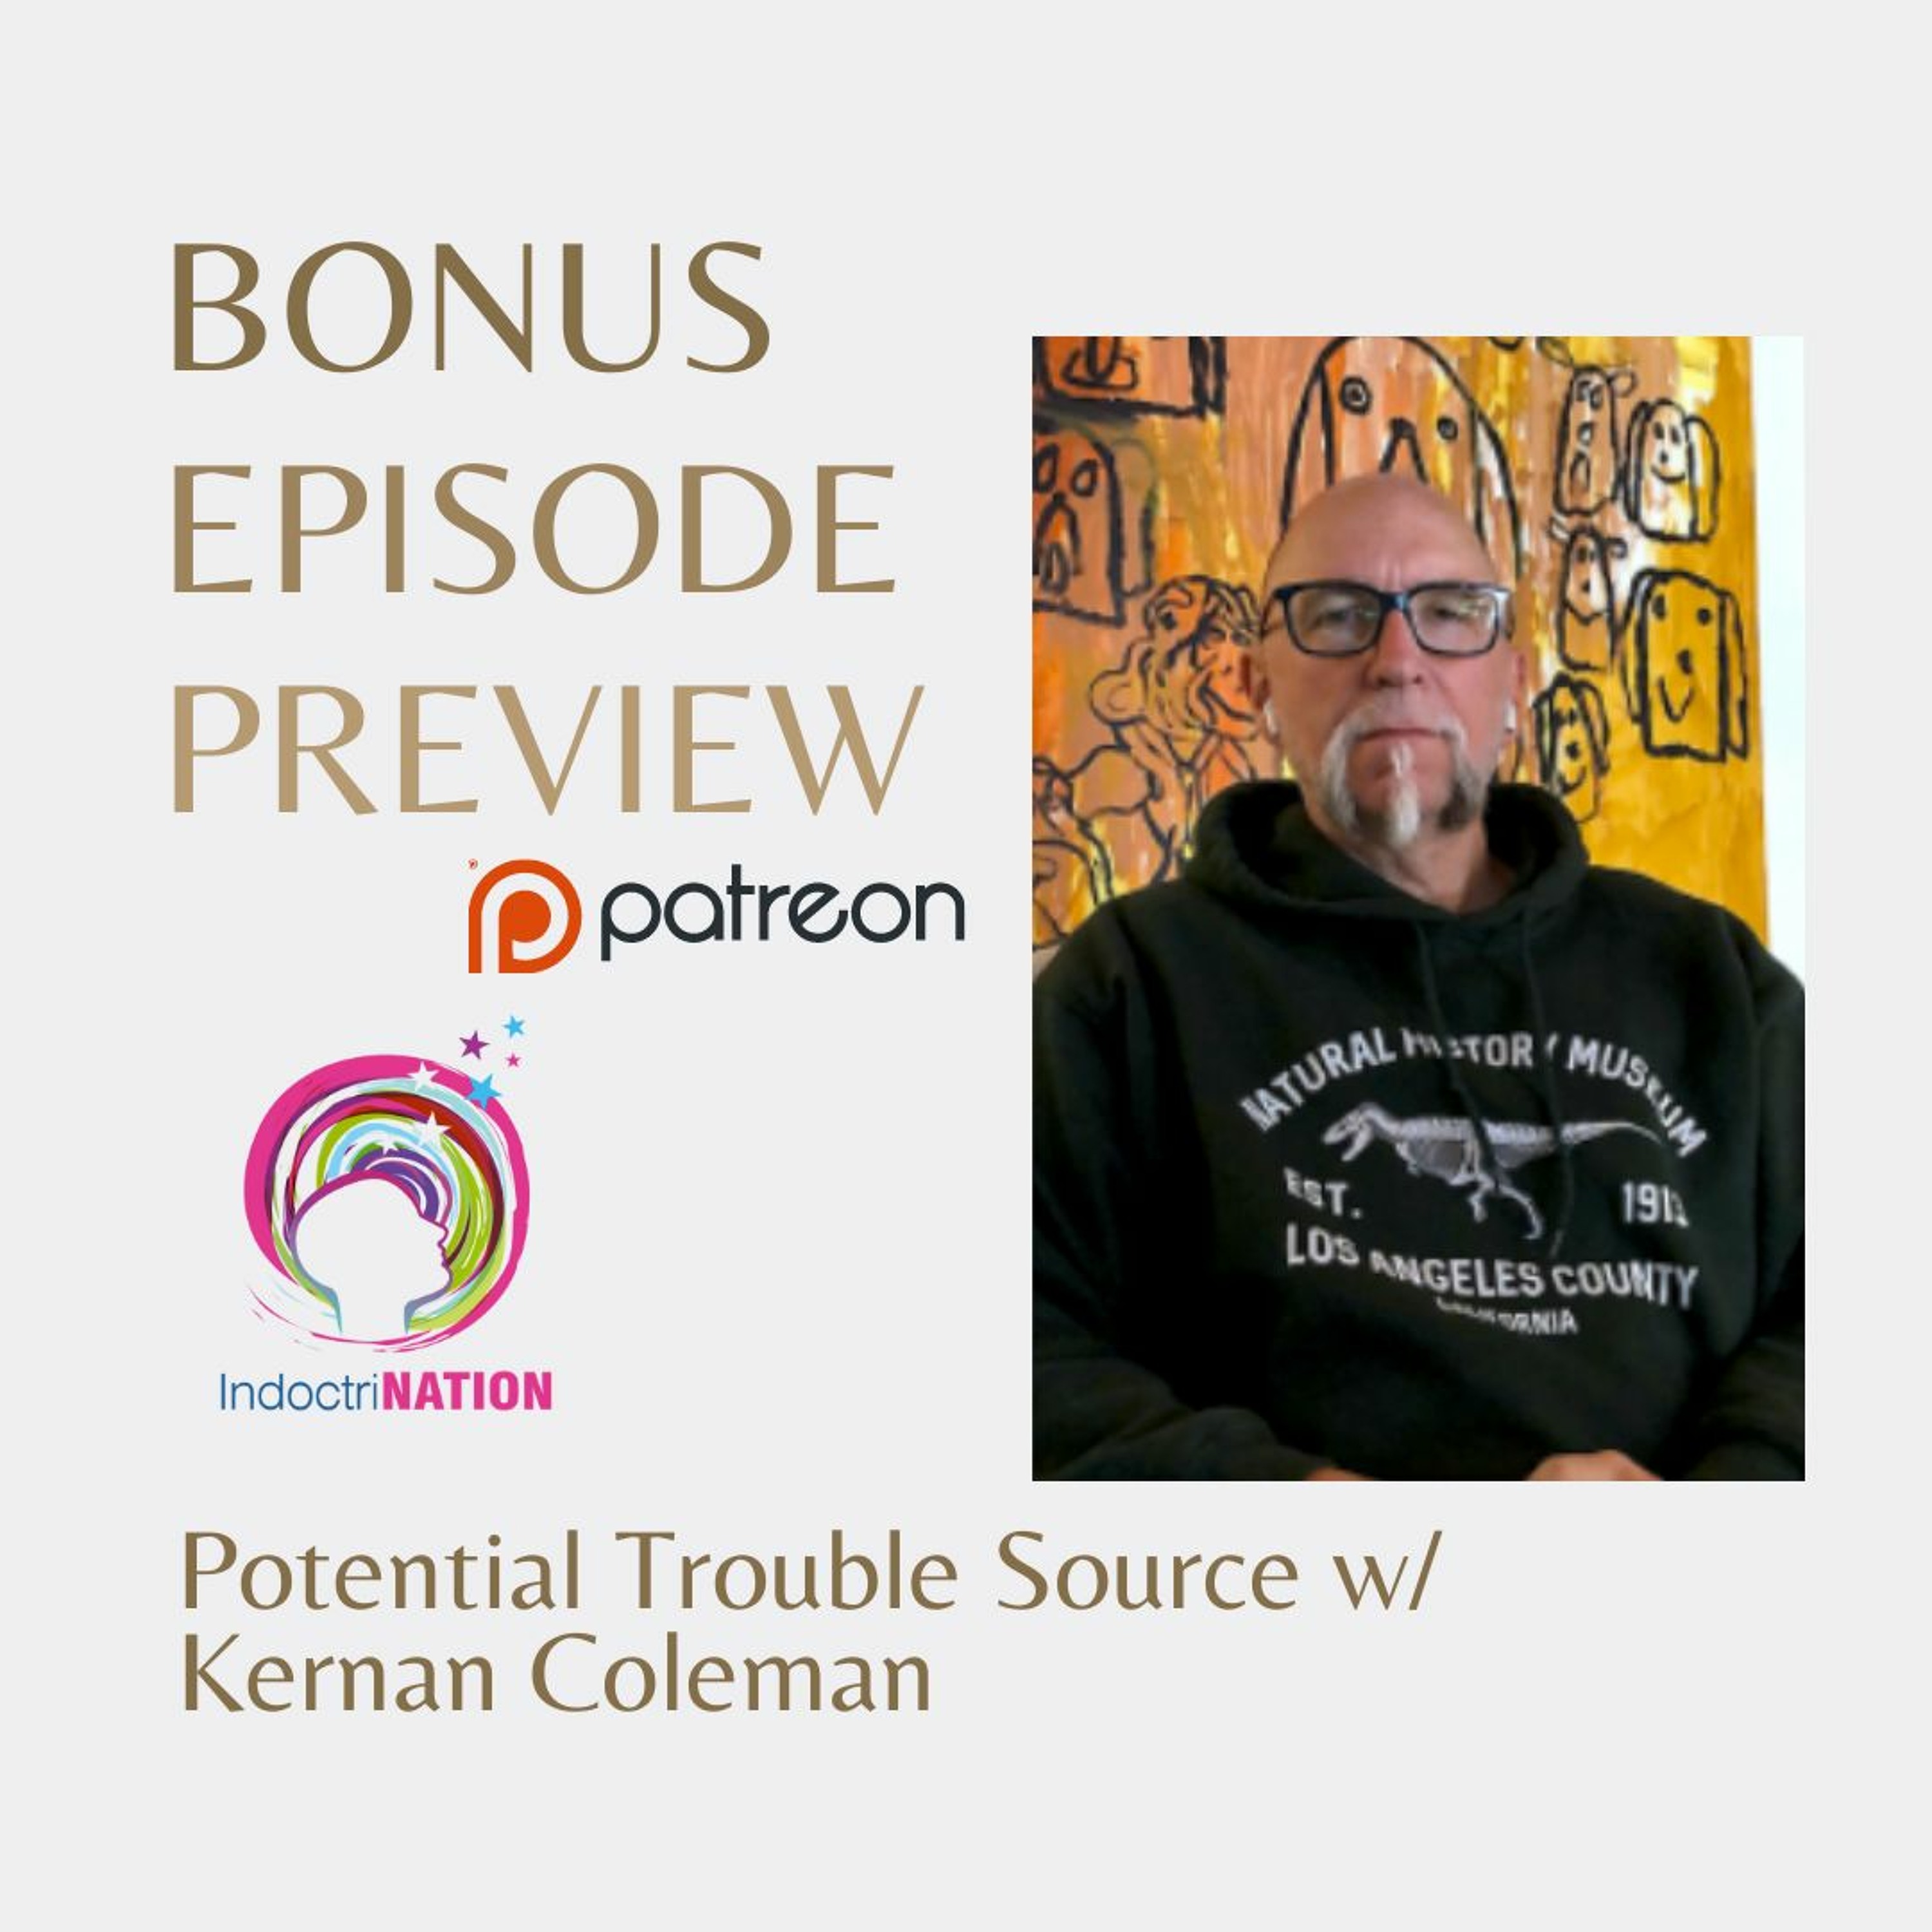 BONUS EPISODE PREVIEW: Potential Trouble Source w/ Kernan Coleman Image